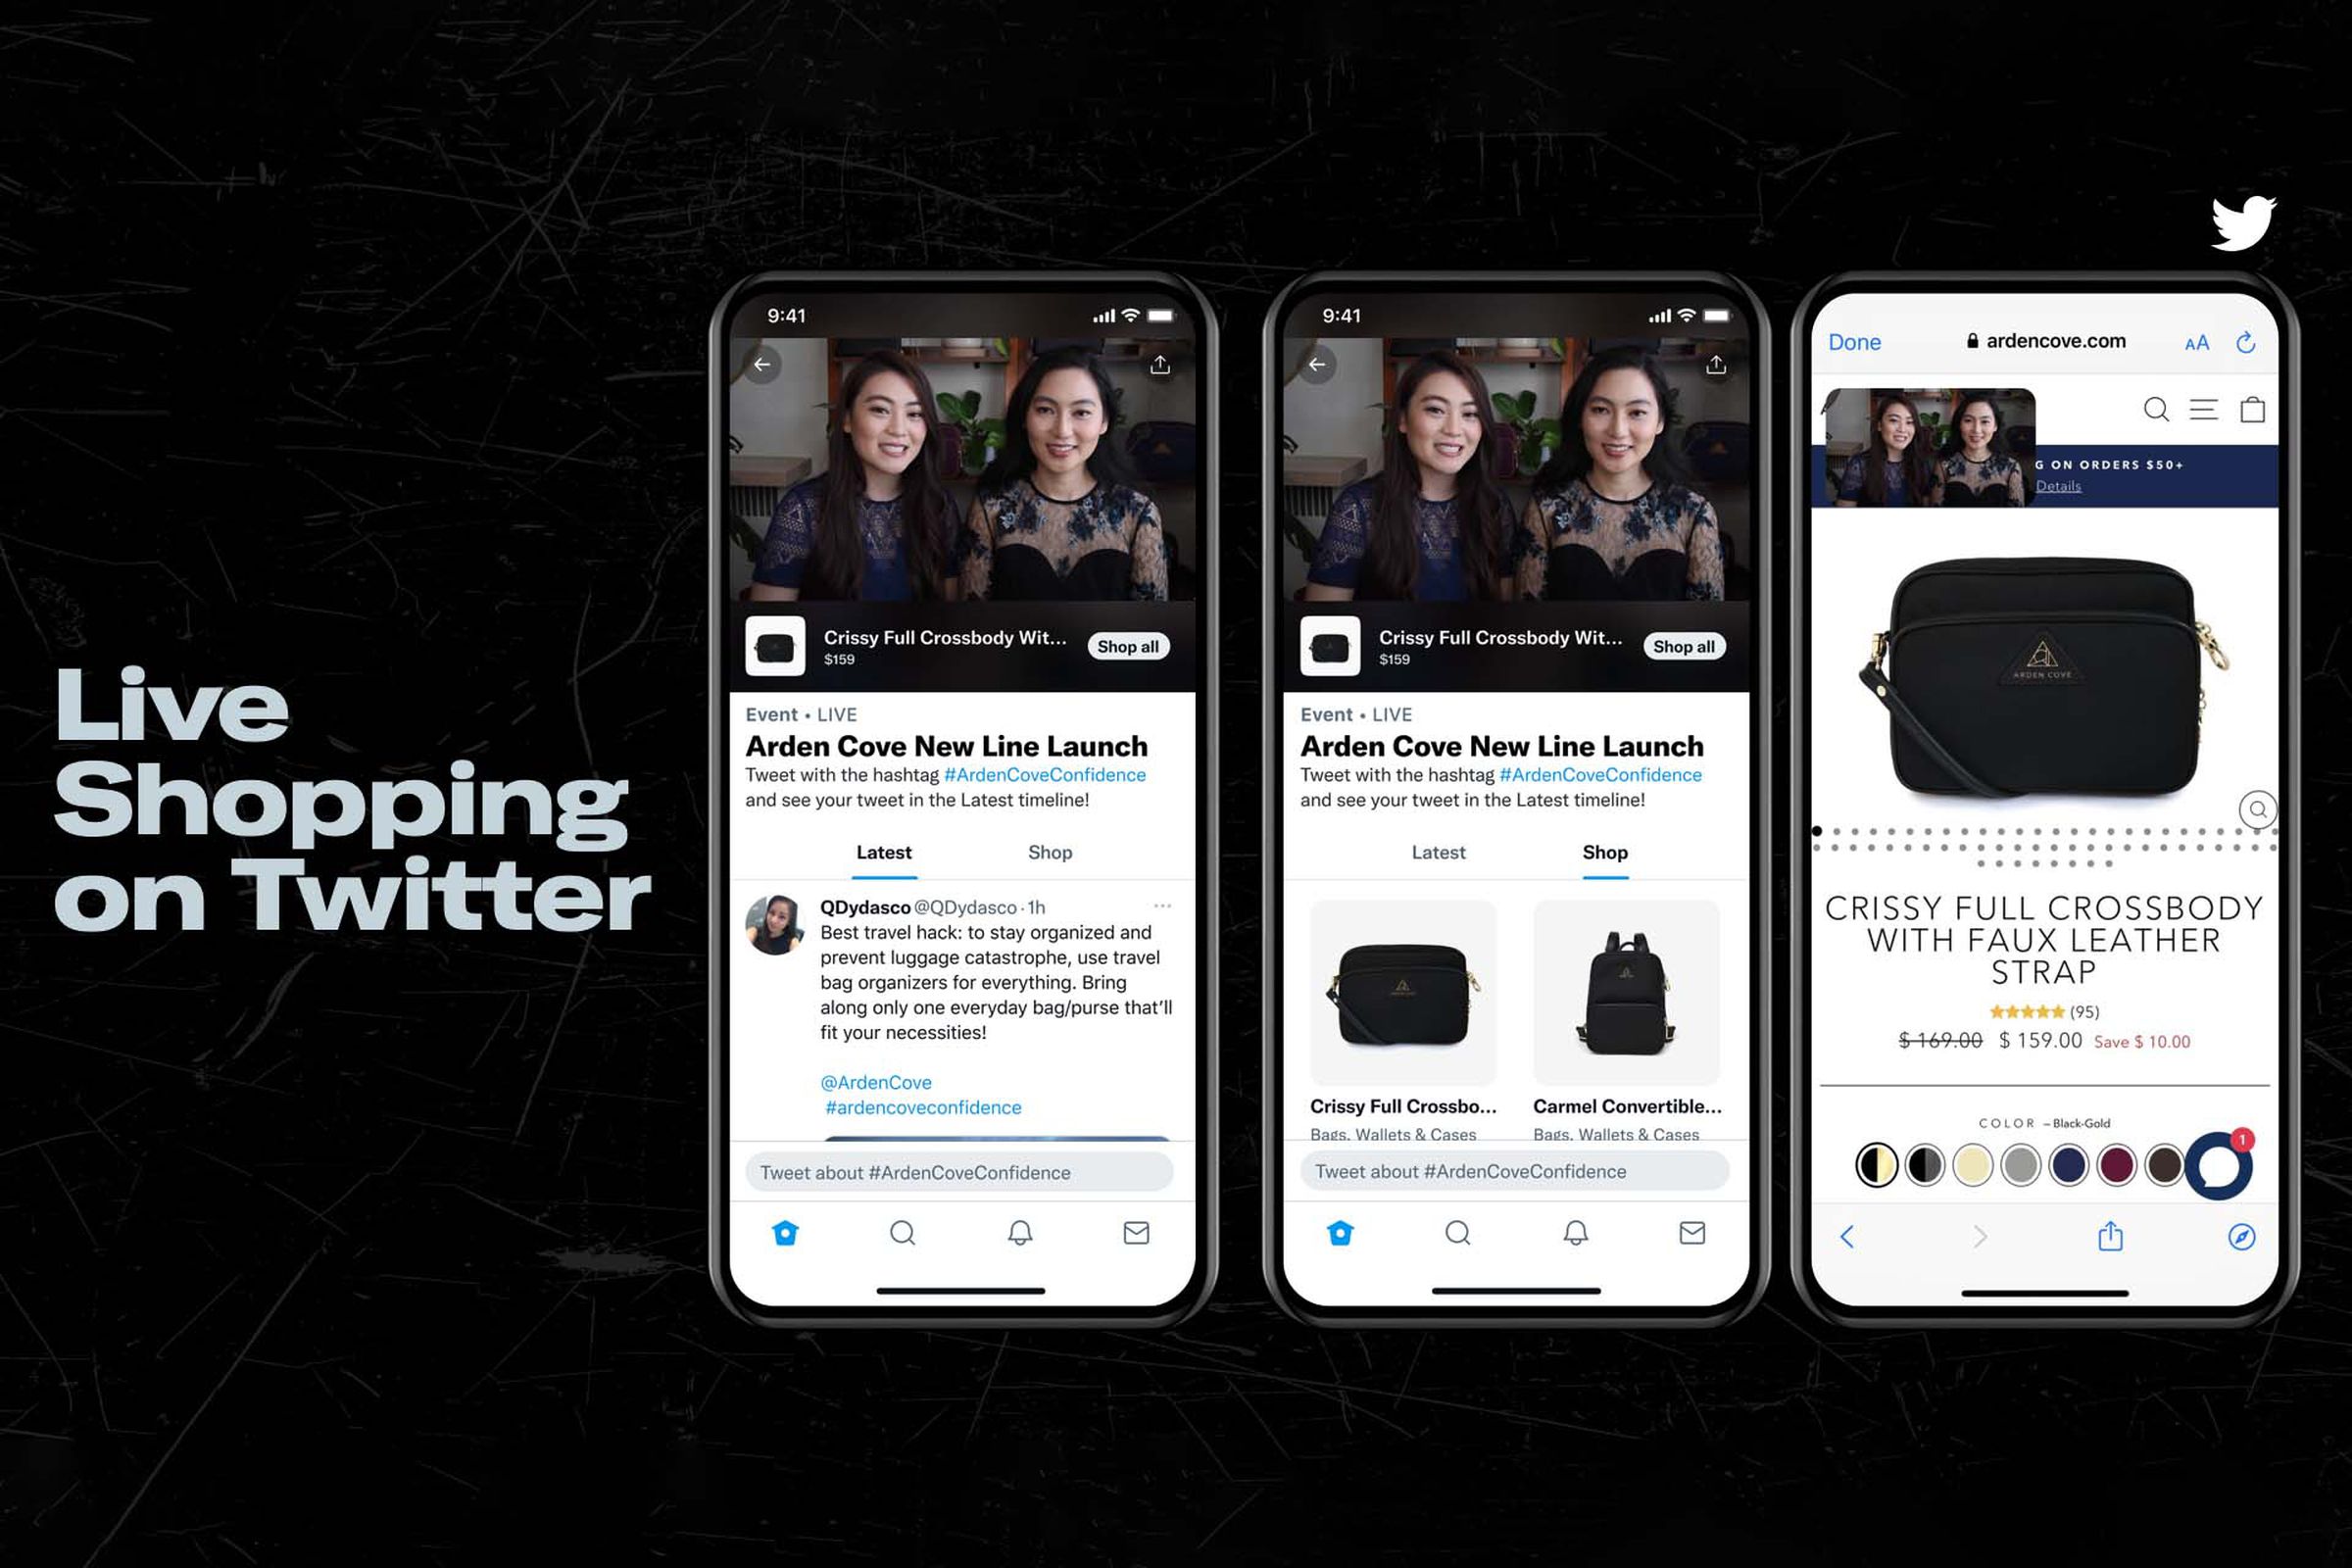 Twitter’s livestream shopping interface.